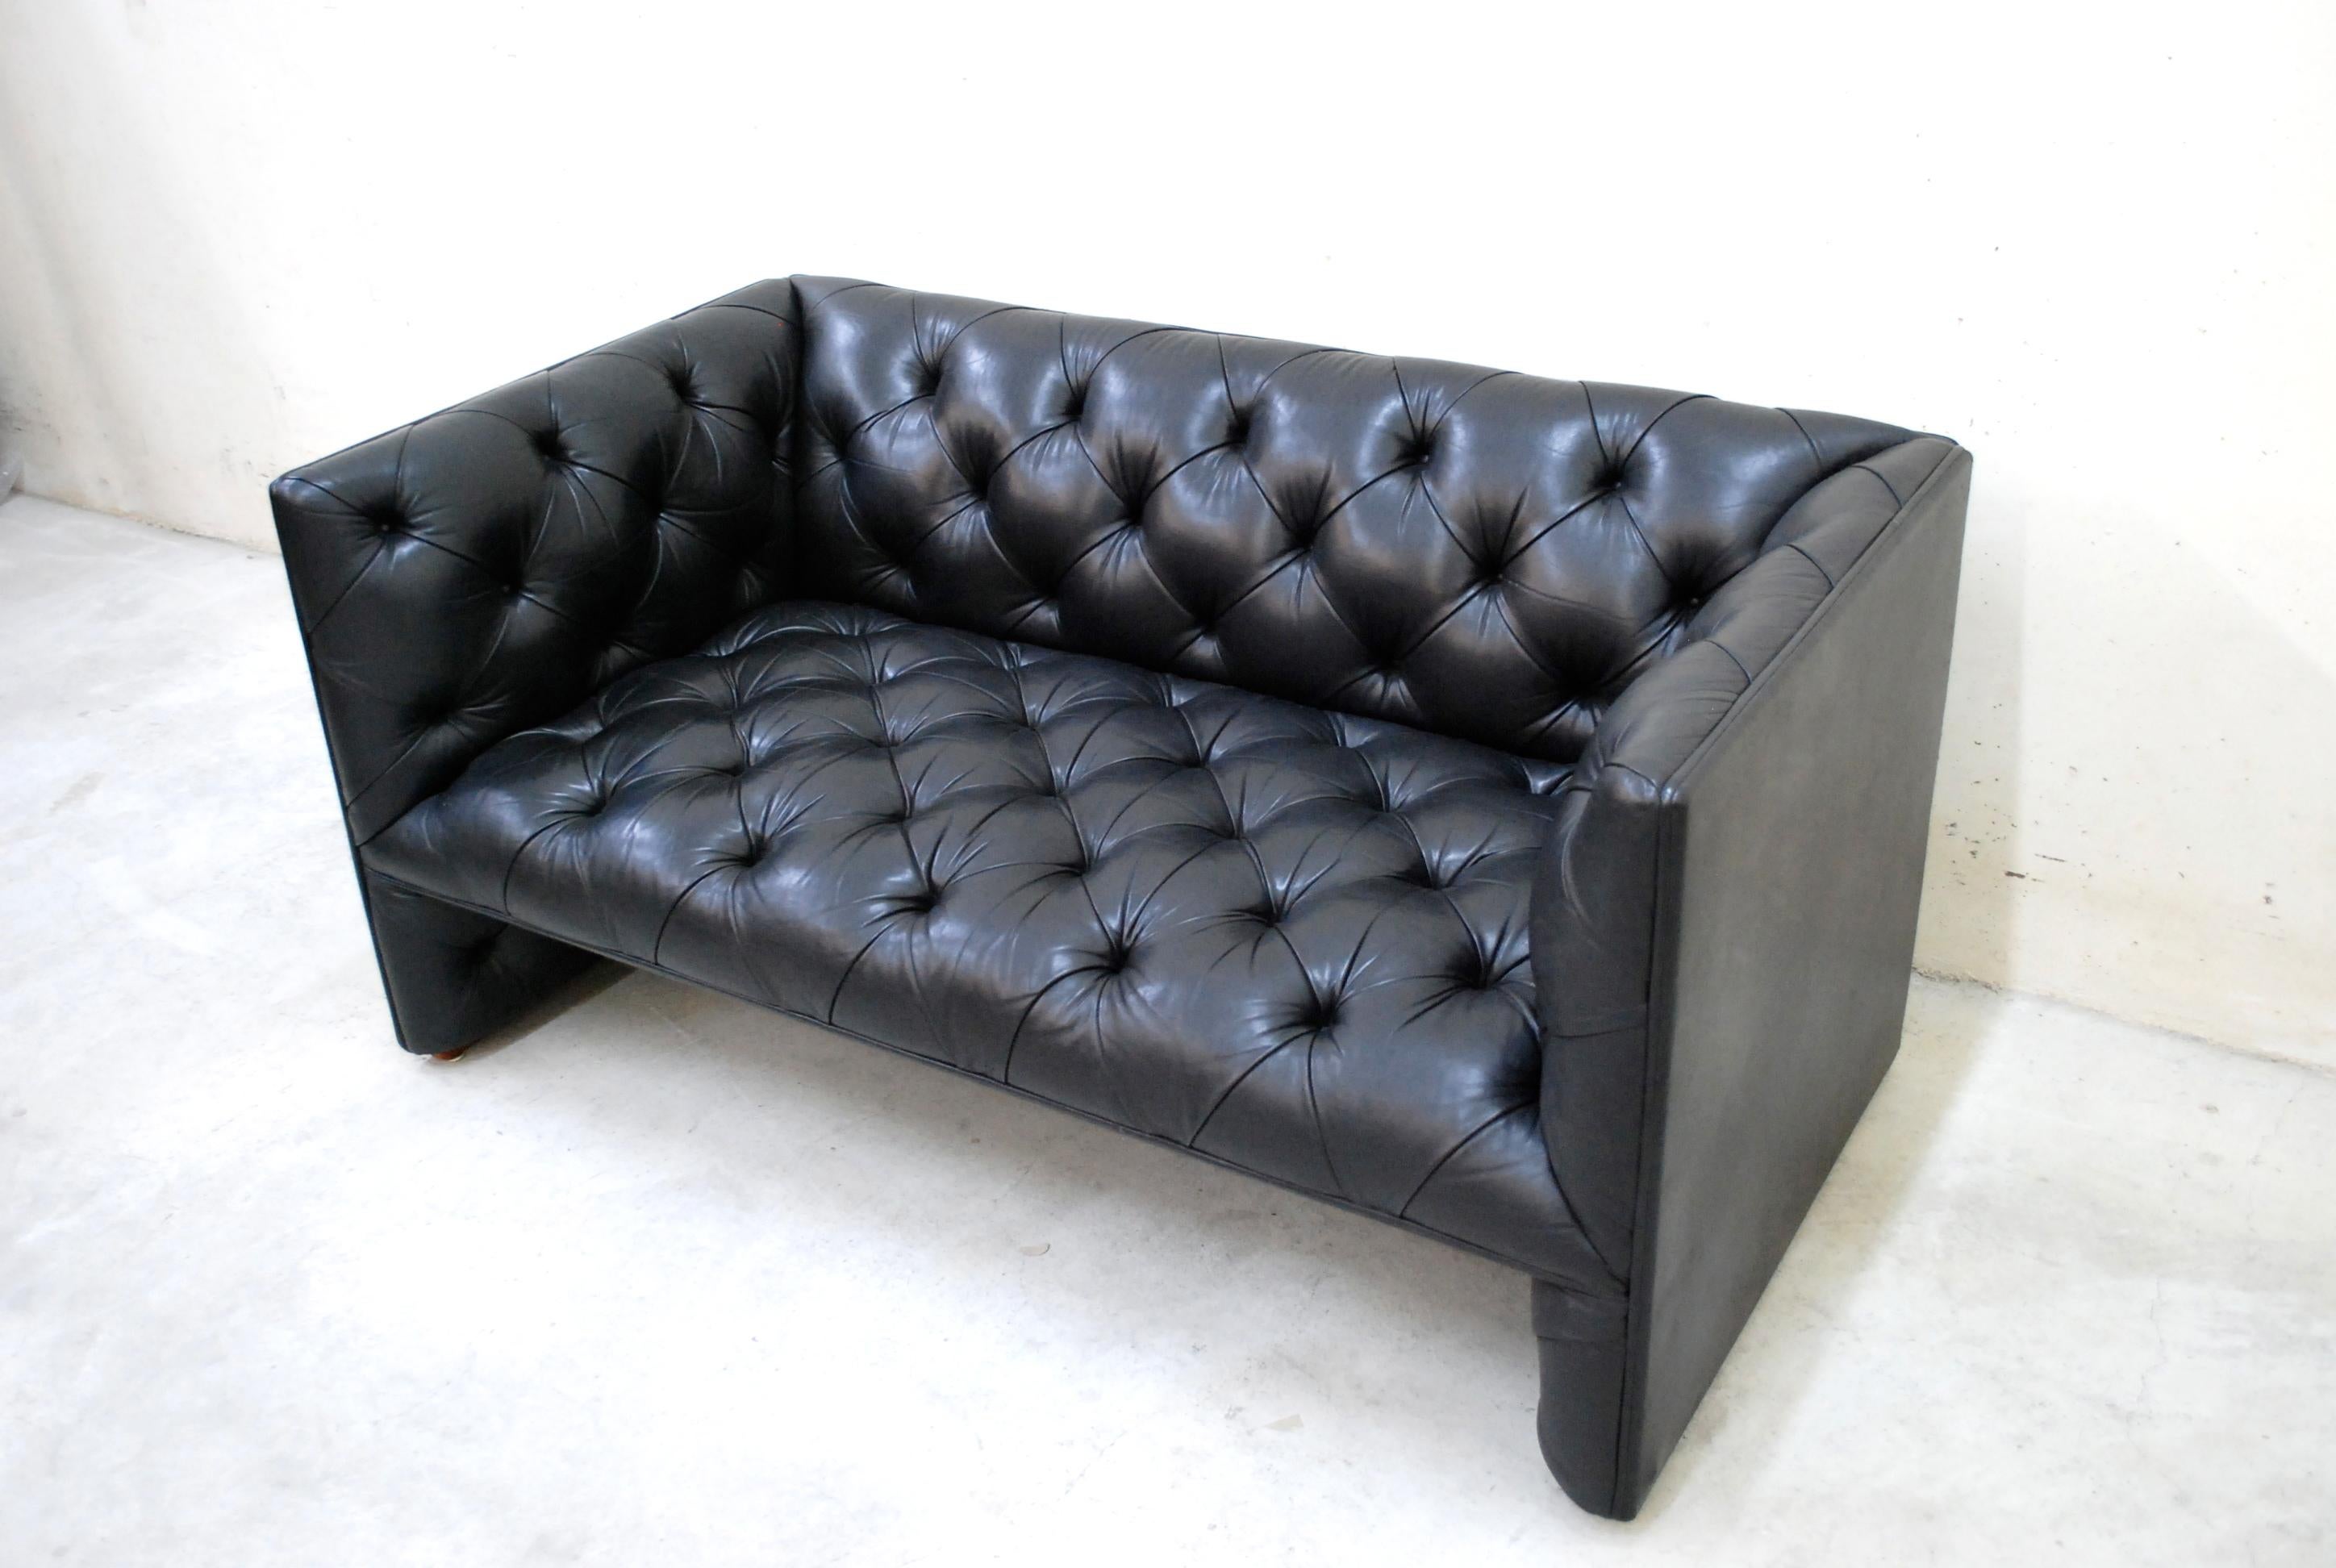 Wittmann Black Leather Sofa Model Edwards Design by Eward B. Tuttle In Good Condition For Sale In Munich, Bavaria